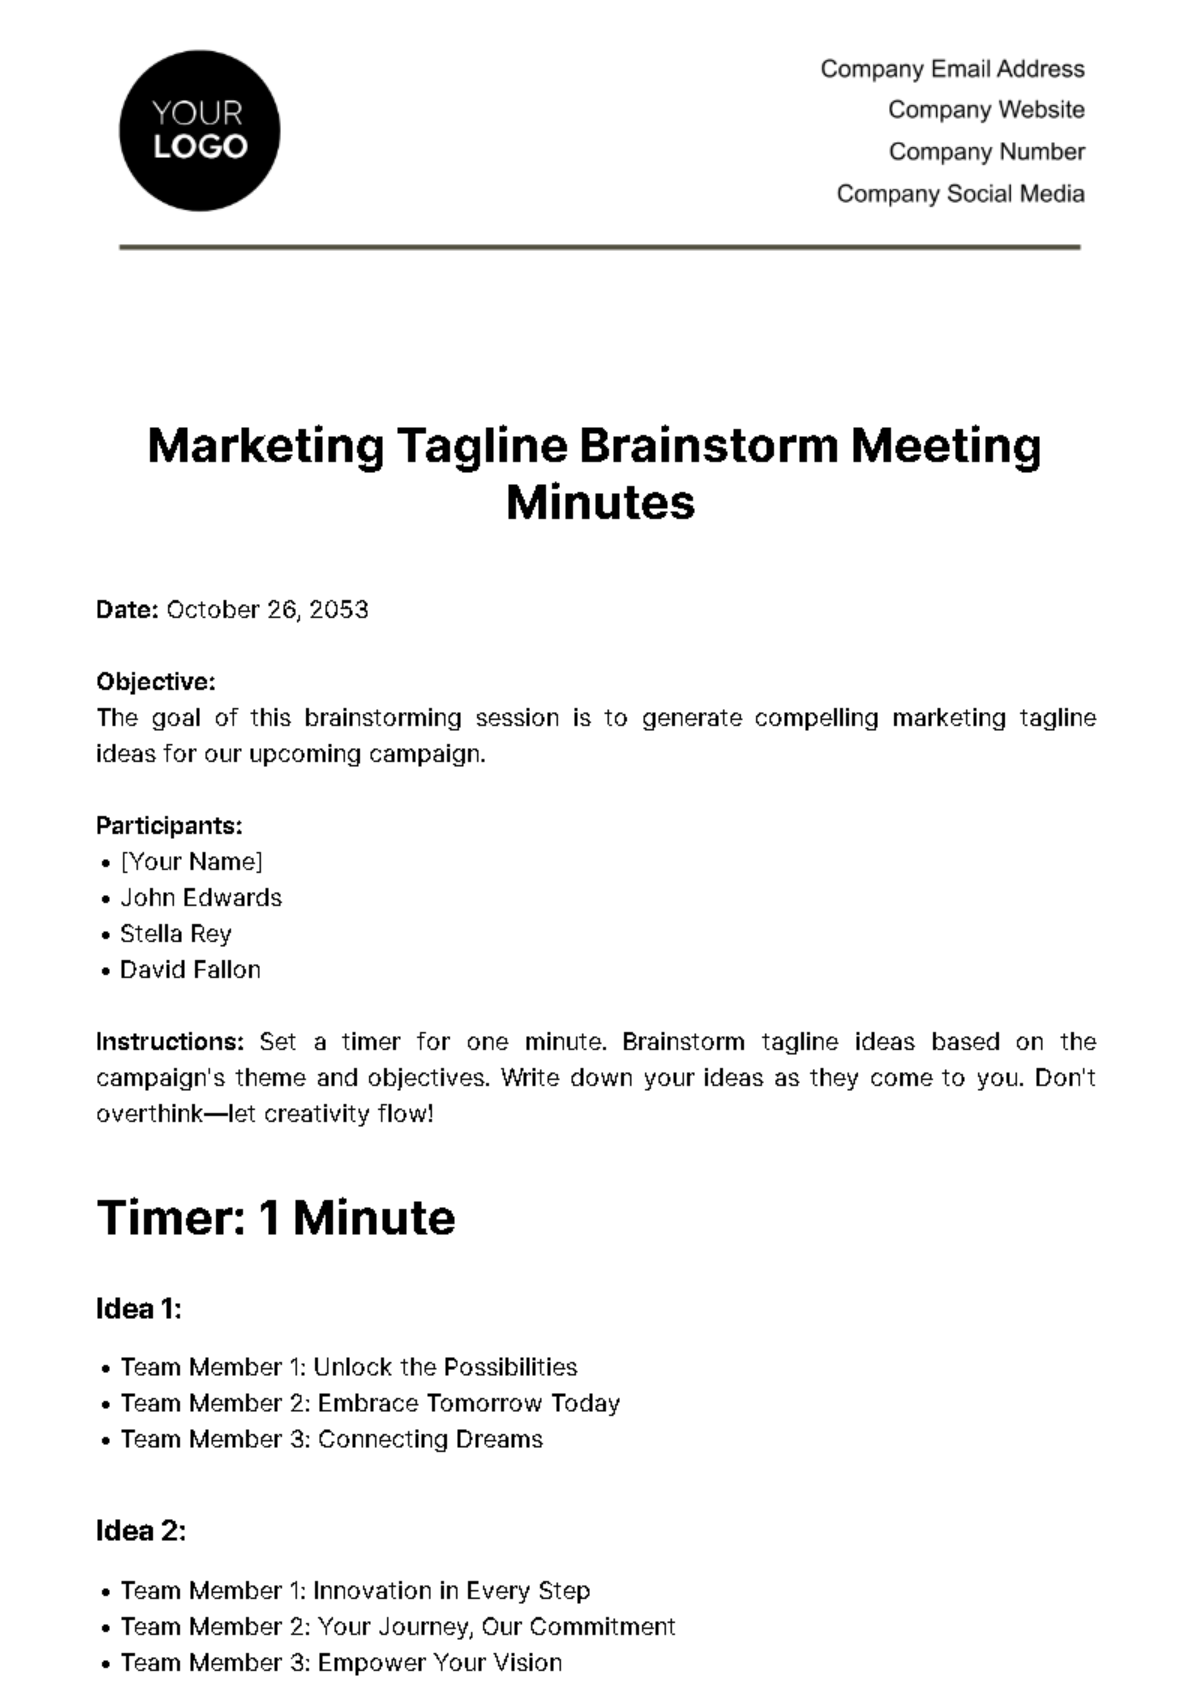 Free Marketing Tagline Brainstorm Minute Template